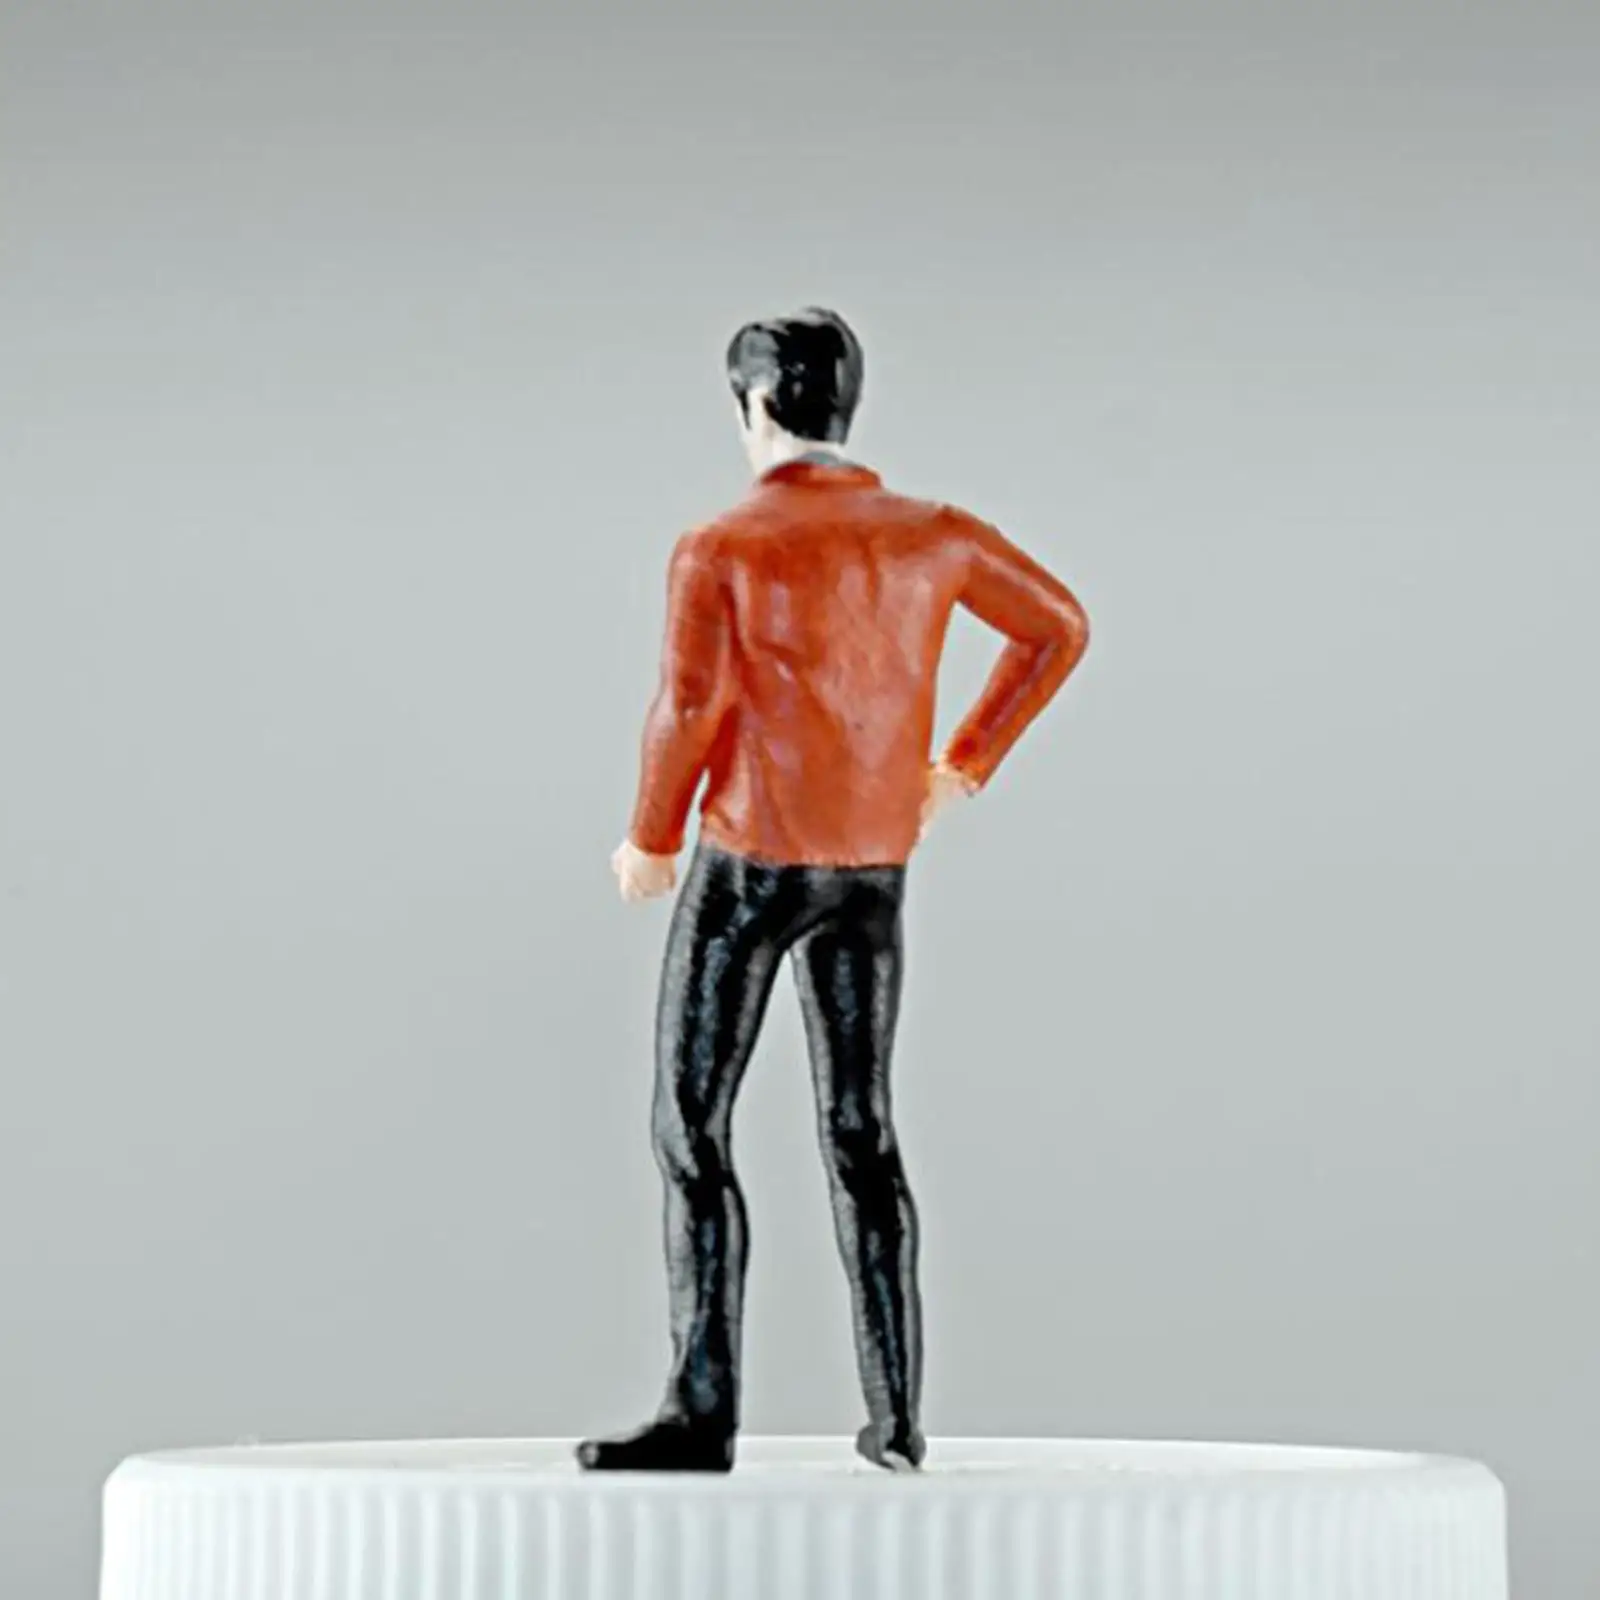 Resin 1/64 Men Figures Photography Props 1/64 Scale Model Figurine Micro Landscapes Decor DIY Scene Decor DIY Projects Accessory